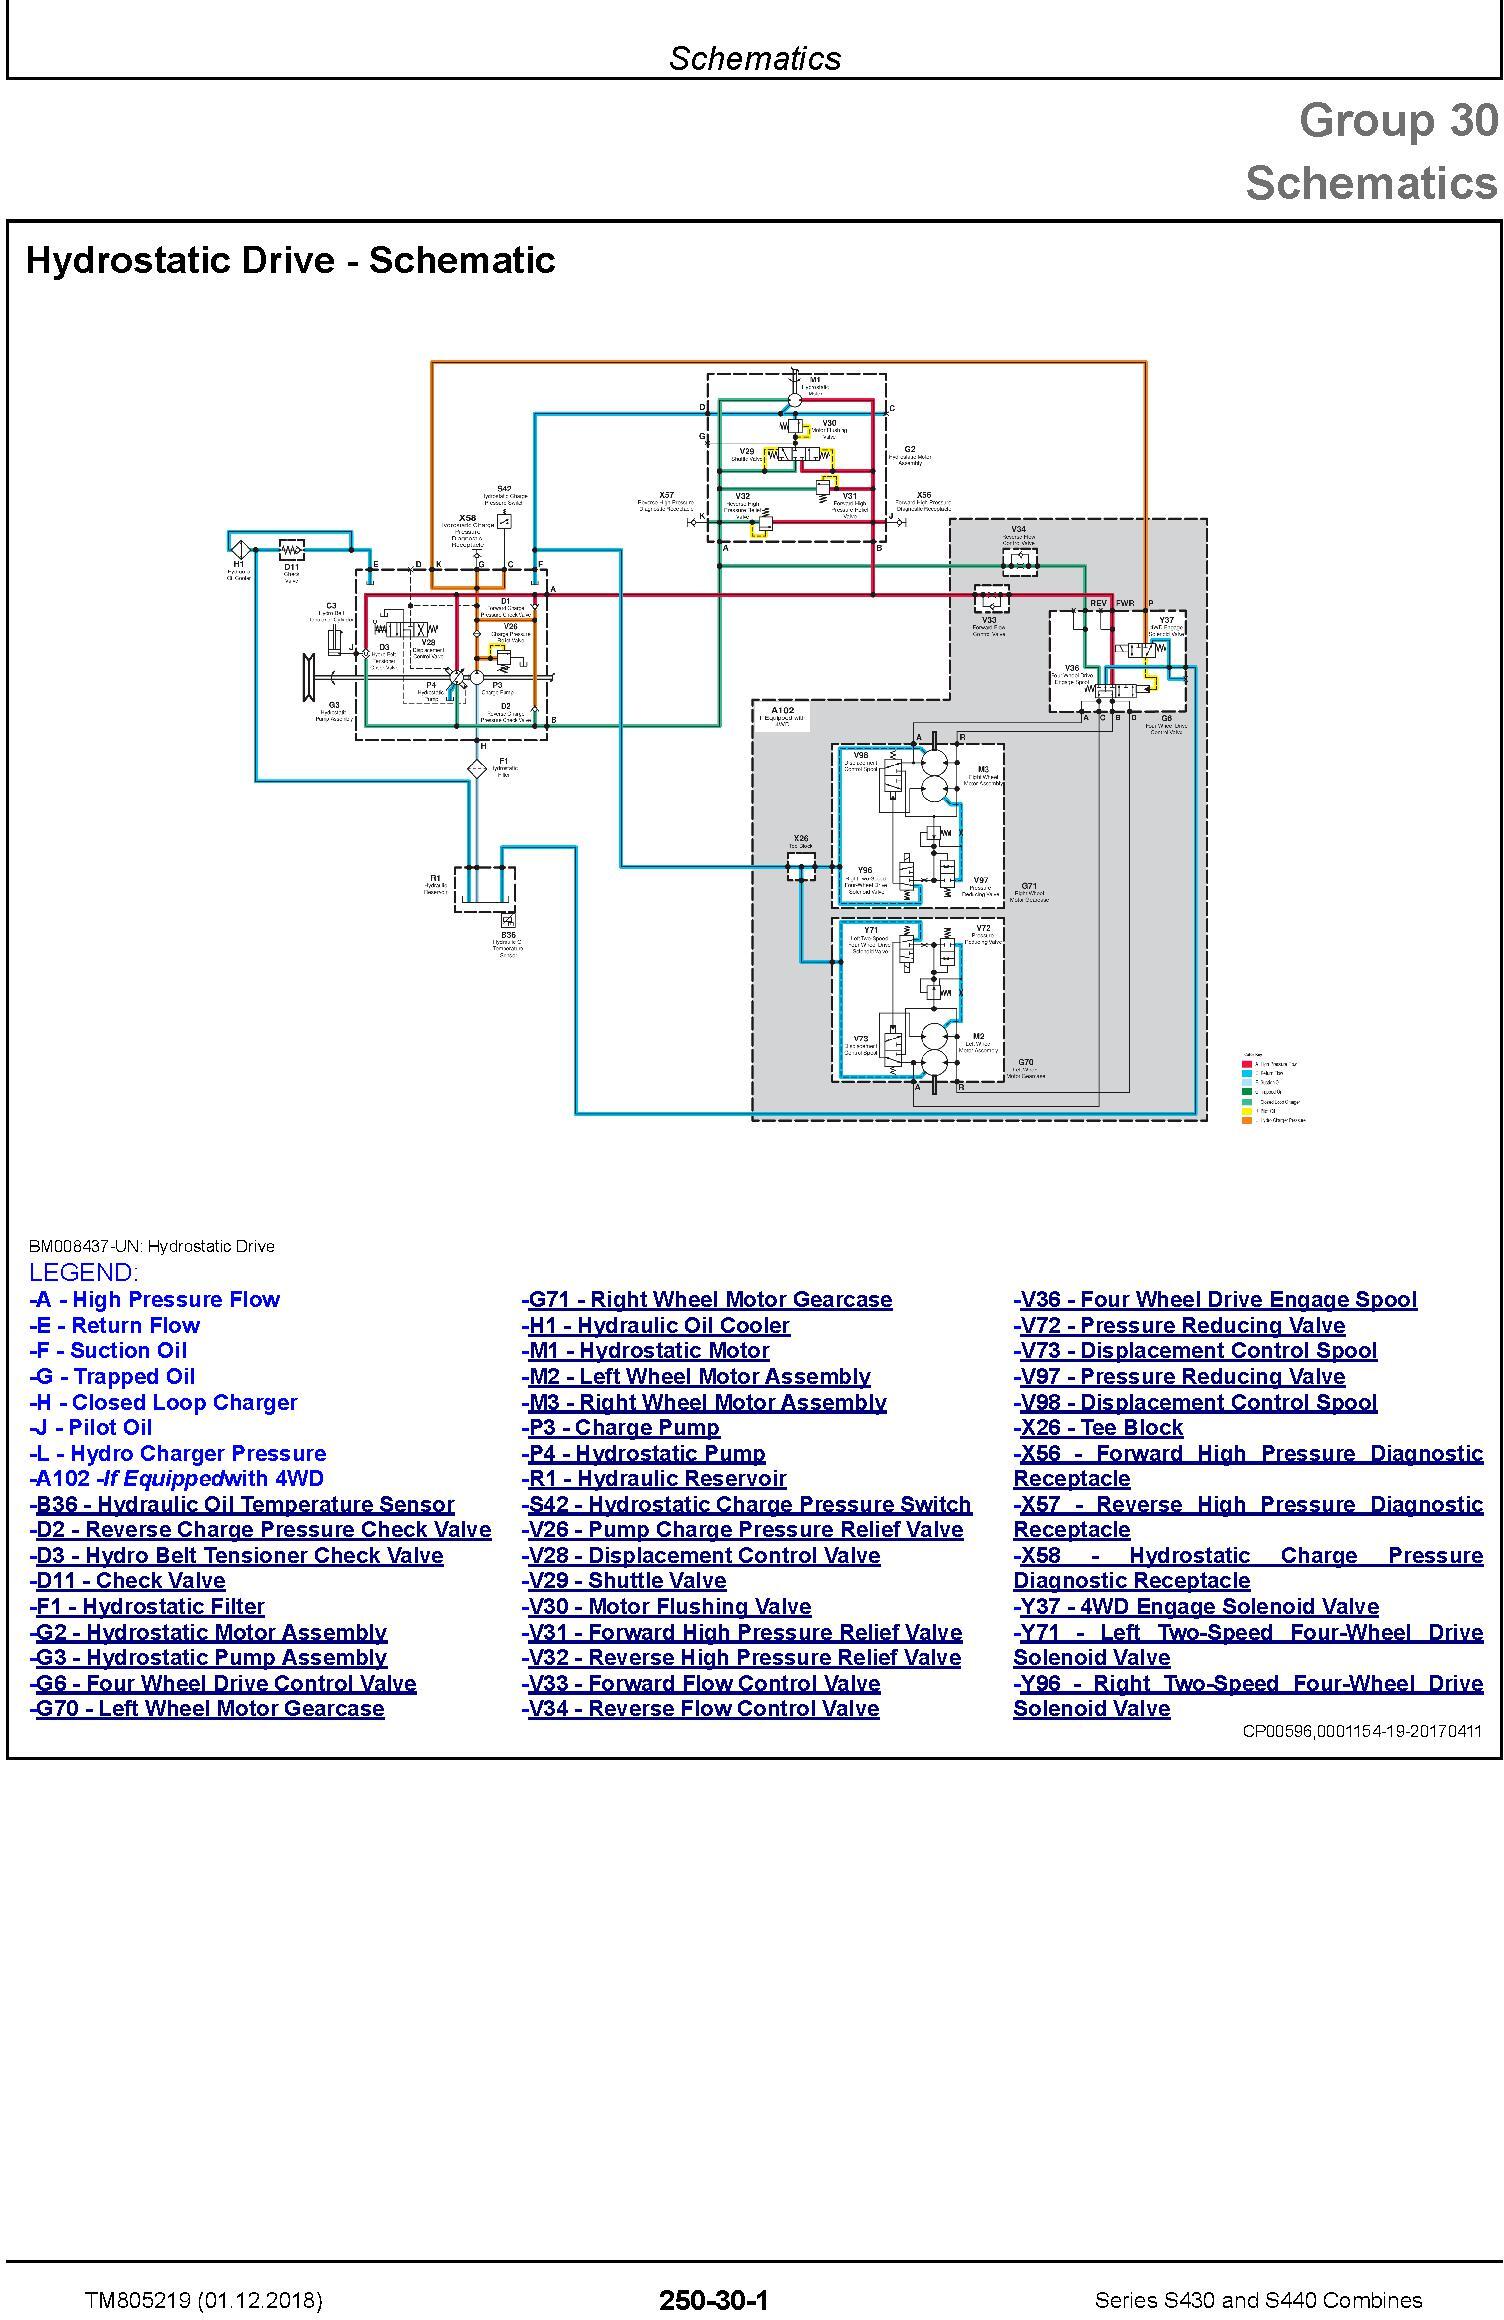 John Deere S430 and S440 Combines Diagnostic Technical Service Manual (TM805219) - 2